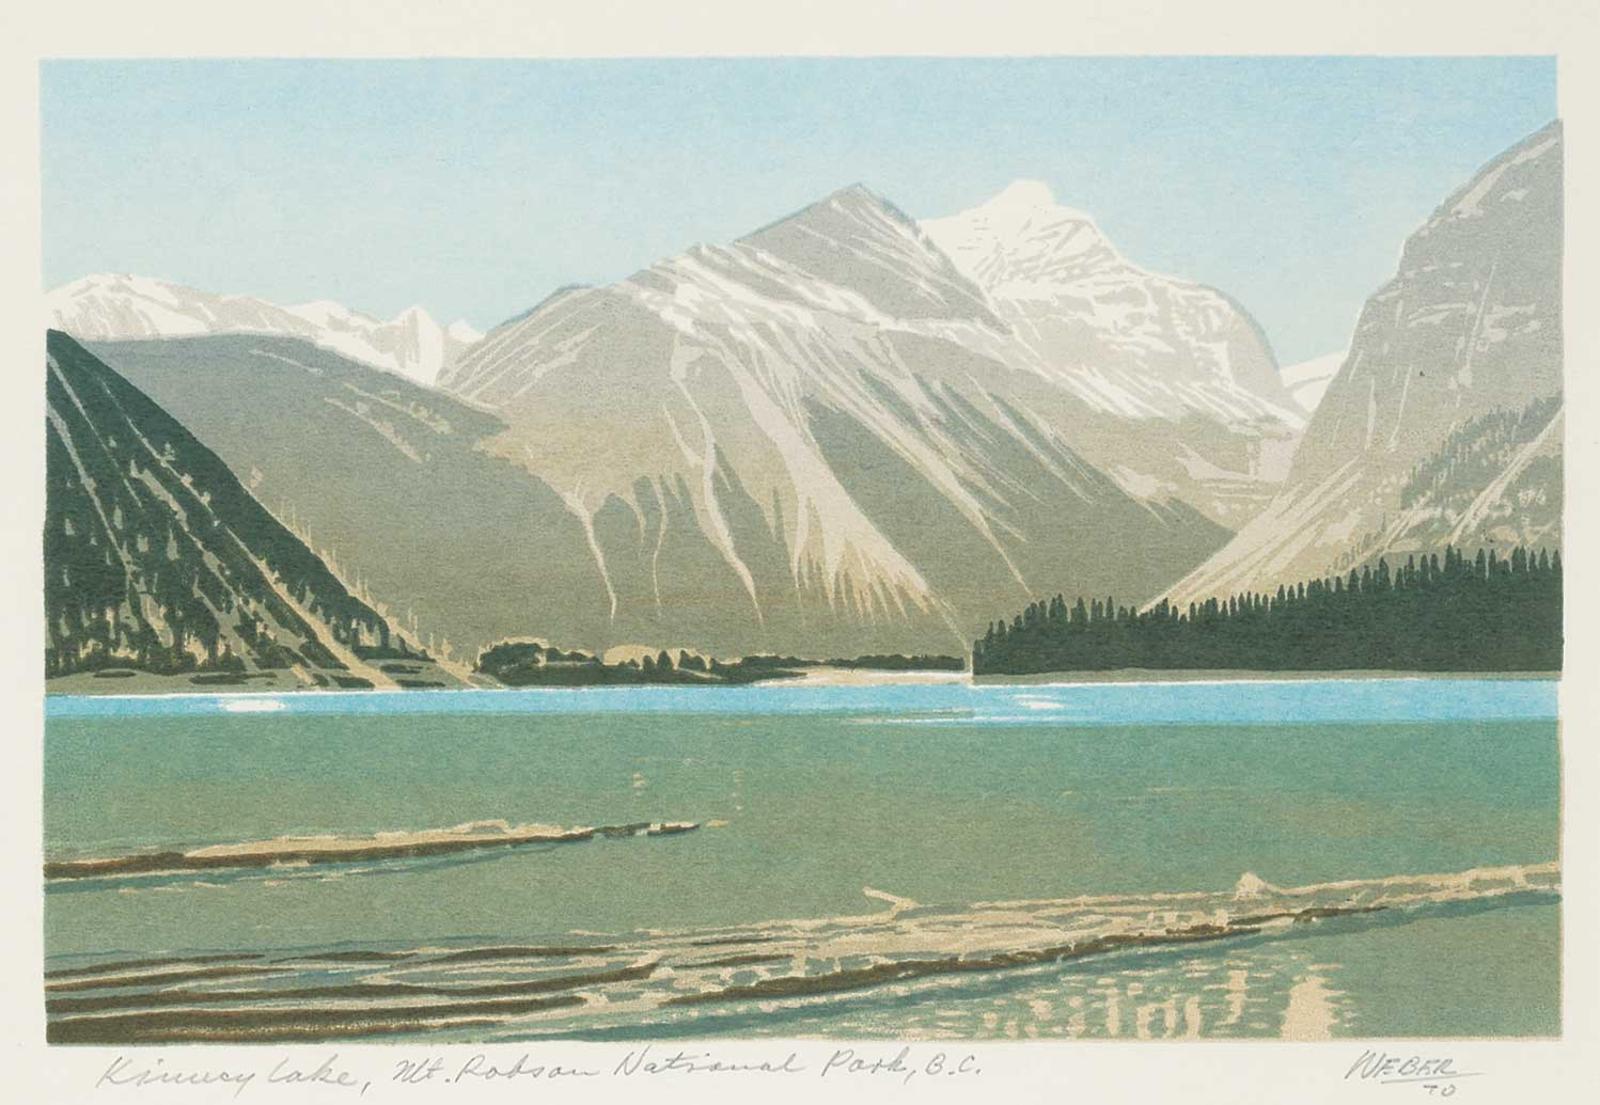 George Weber (1907-2002) - Kinway Lake, Mt. Robson National Park, B.C.